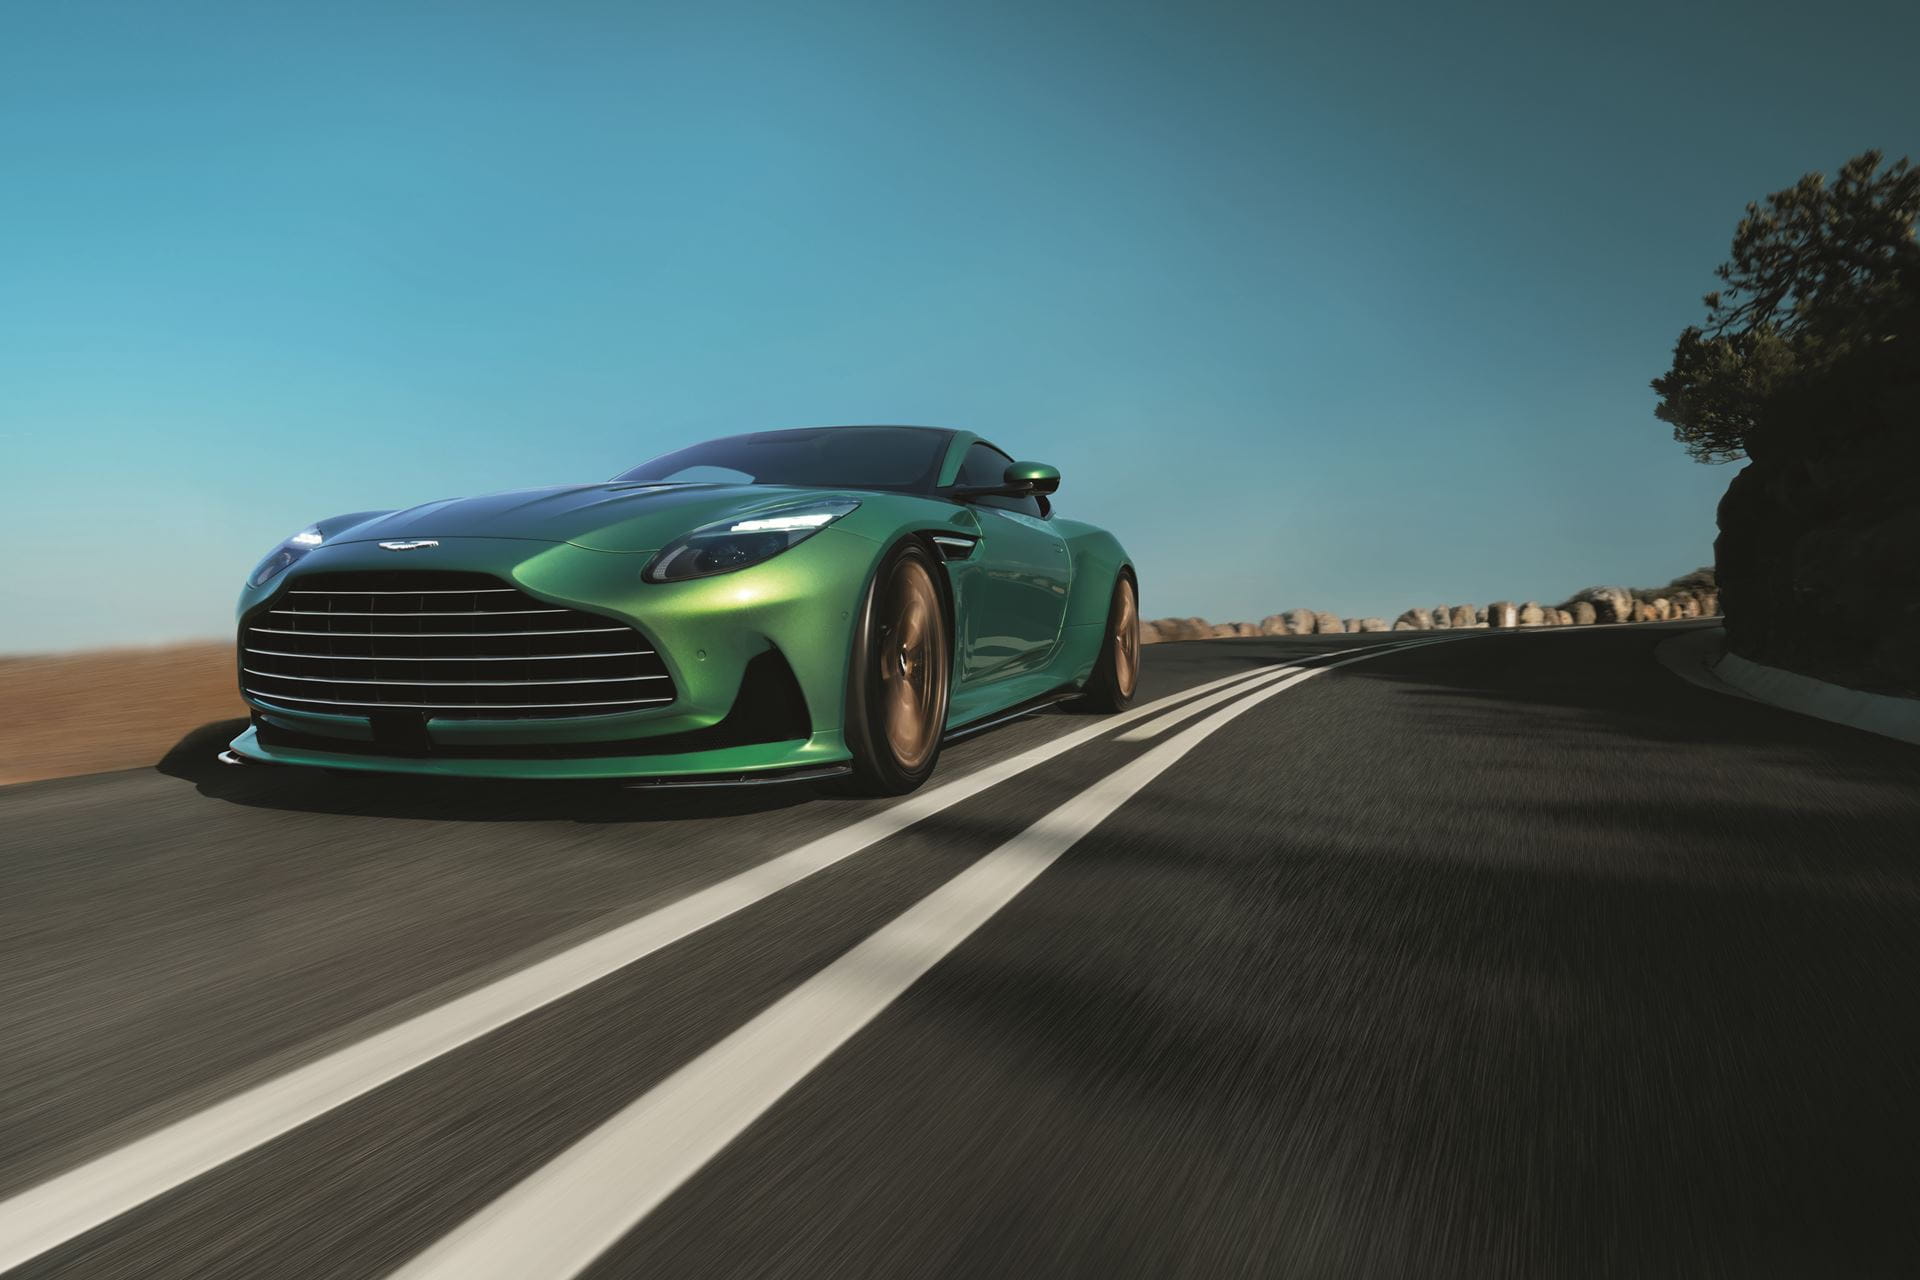 Aston Martin celebrates with stunning open-cockpit concept